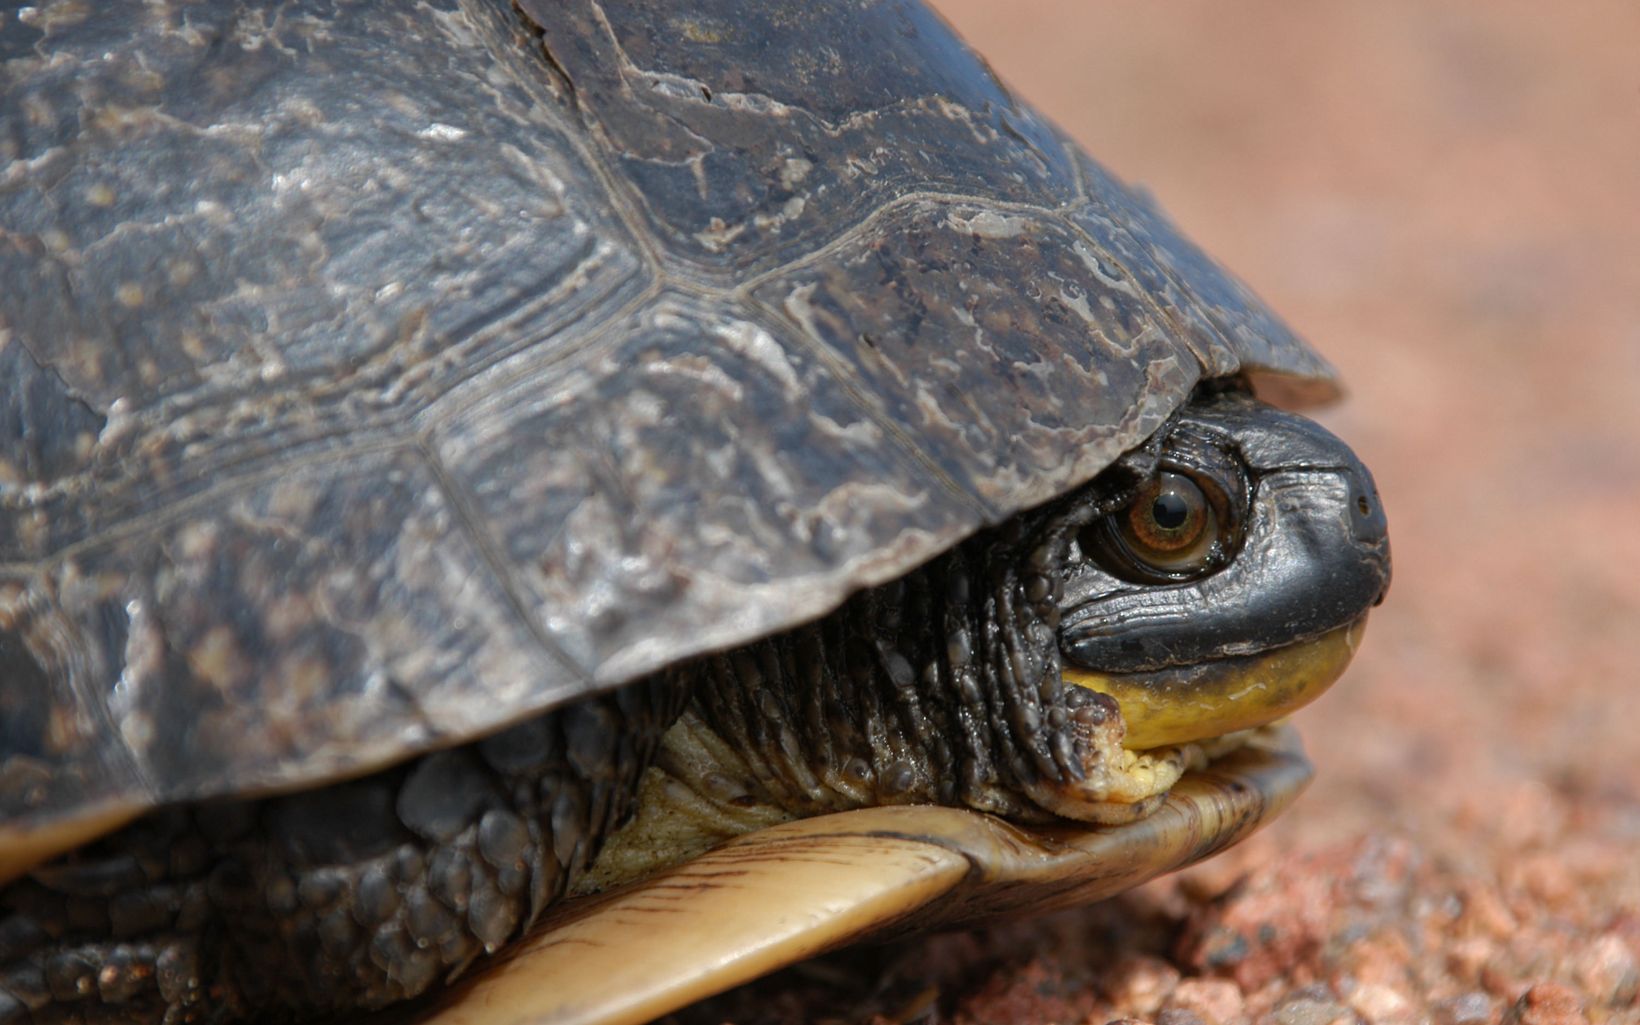 A Blanding's turtle.